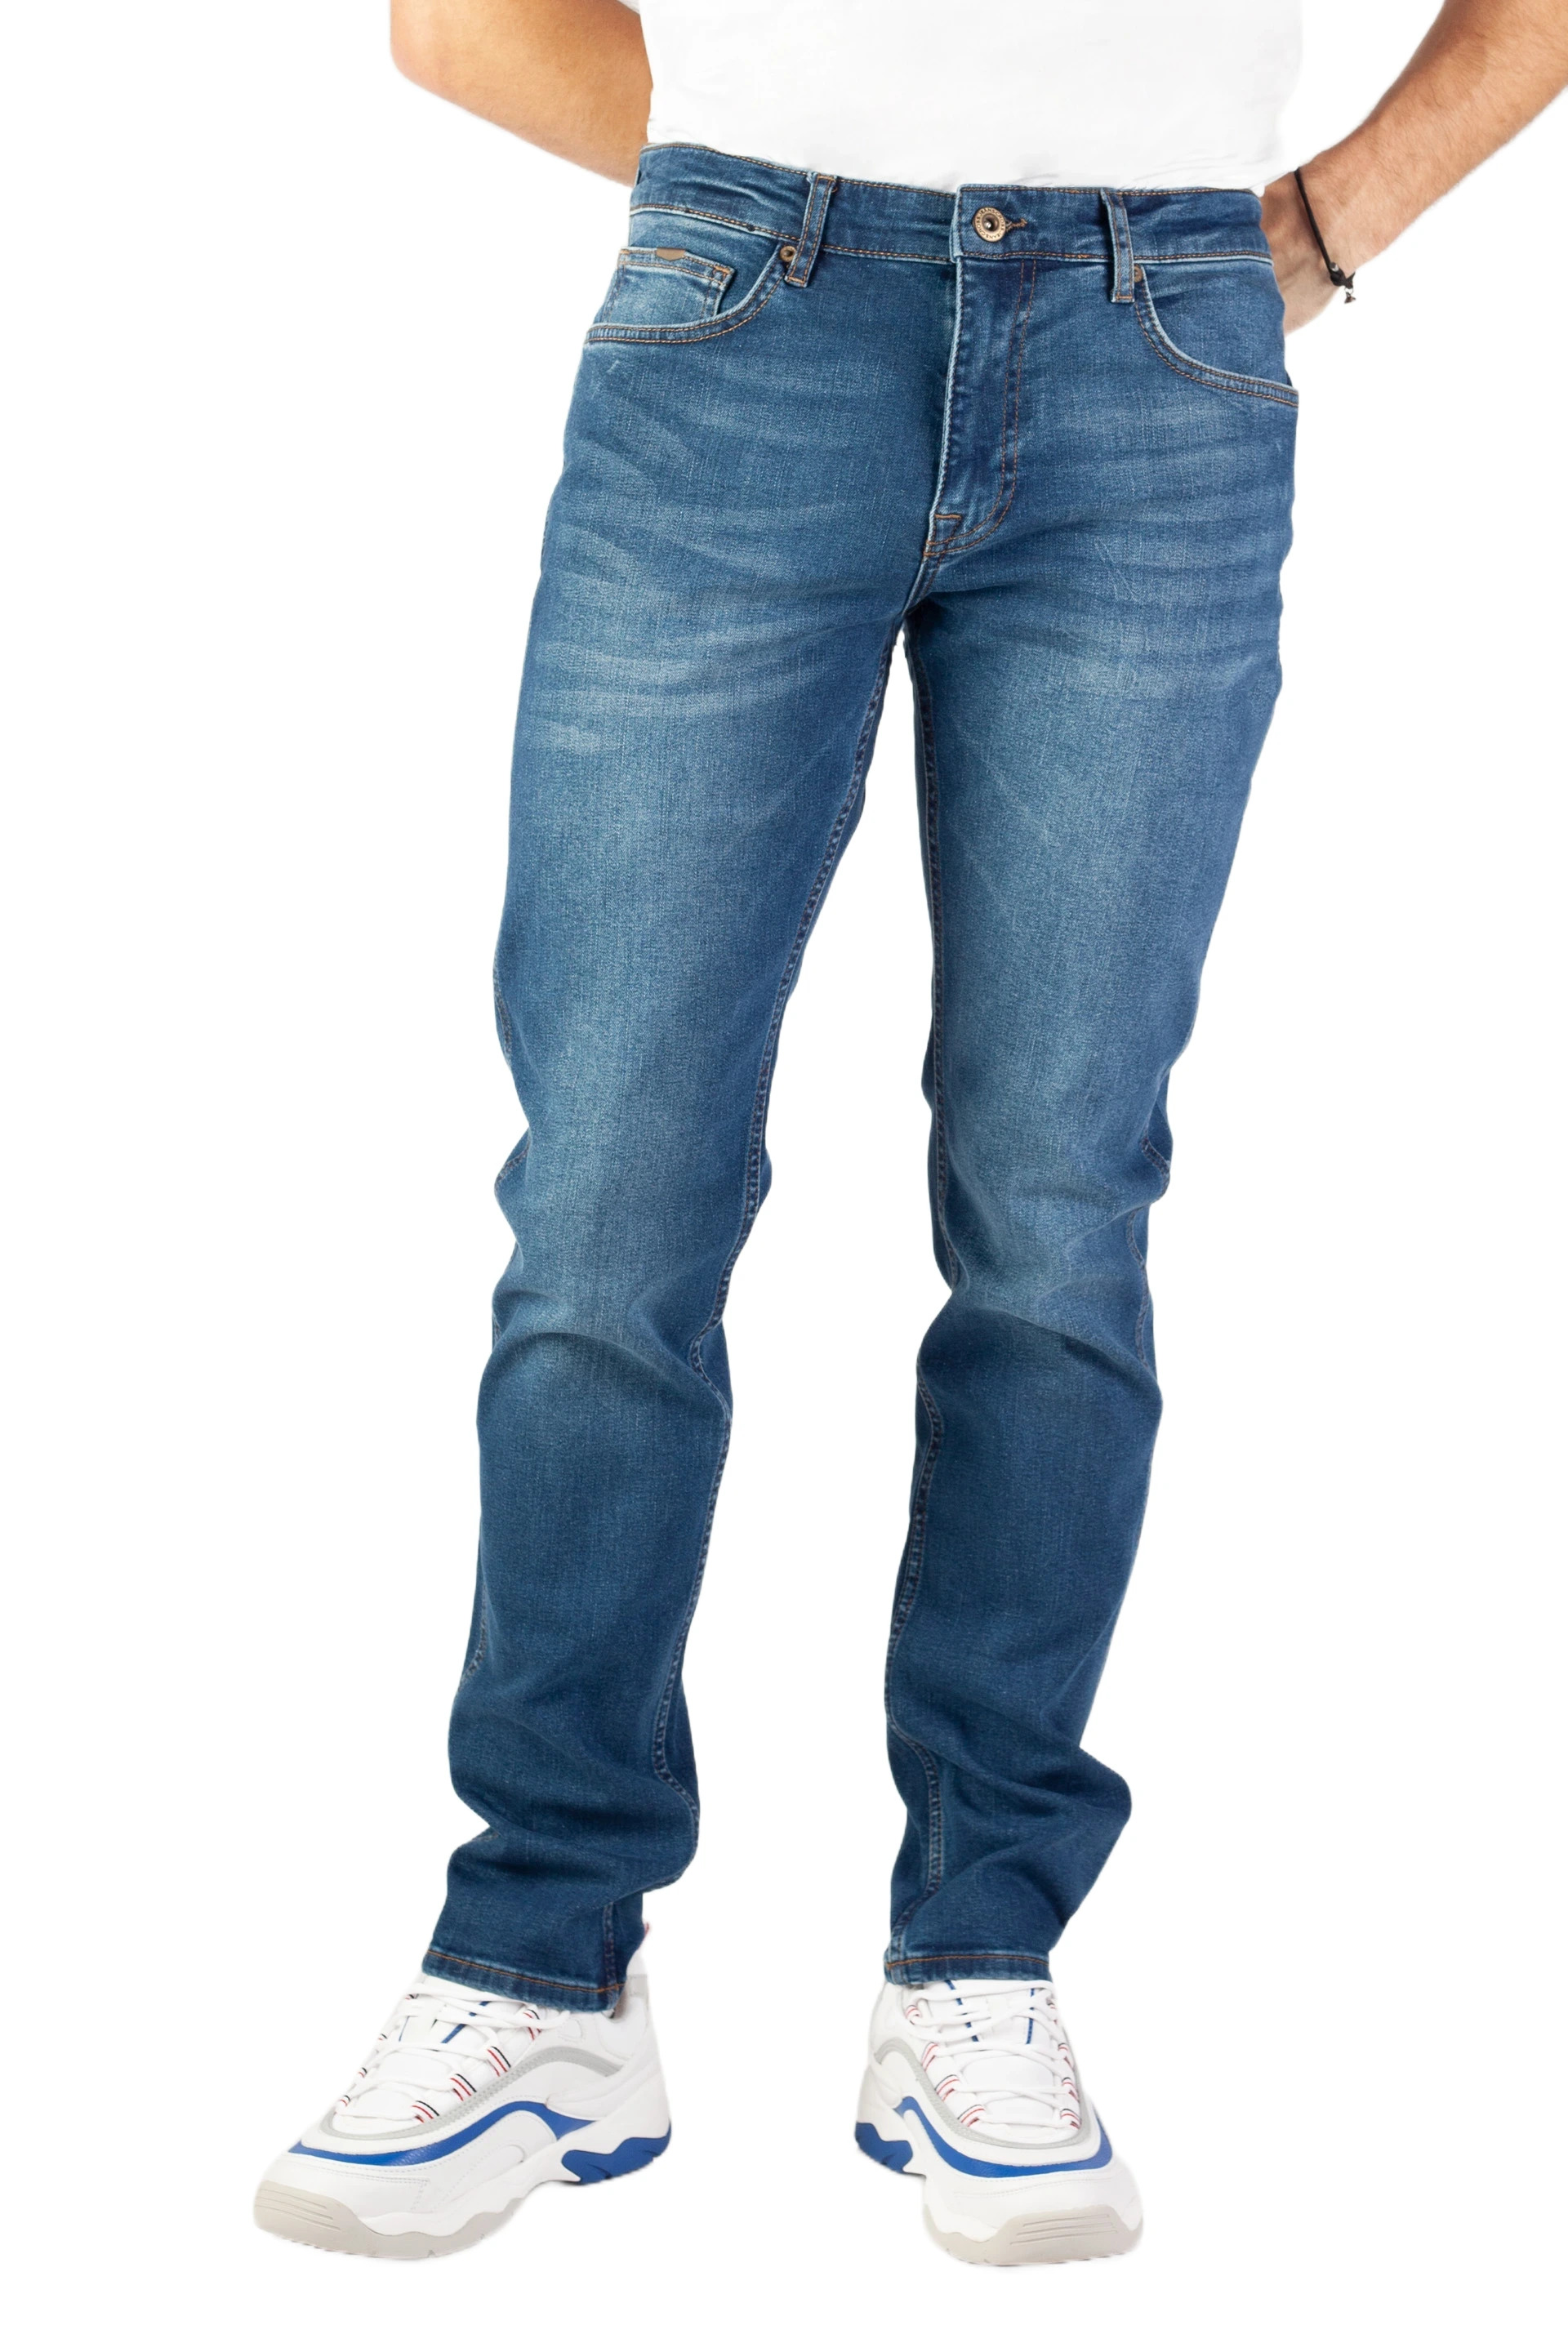 Jeans CROSS JEANS C132-046